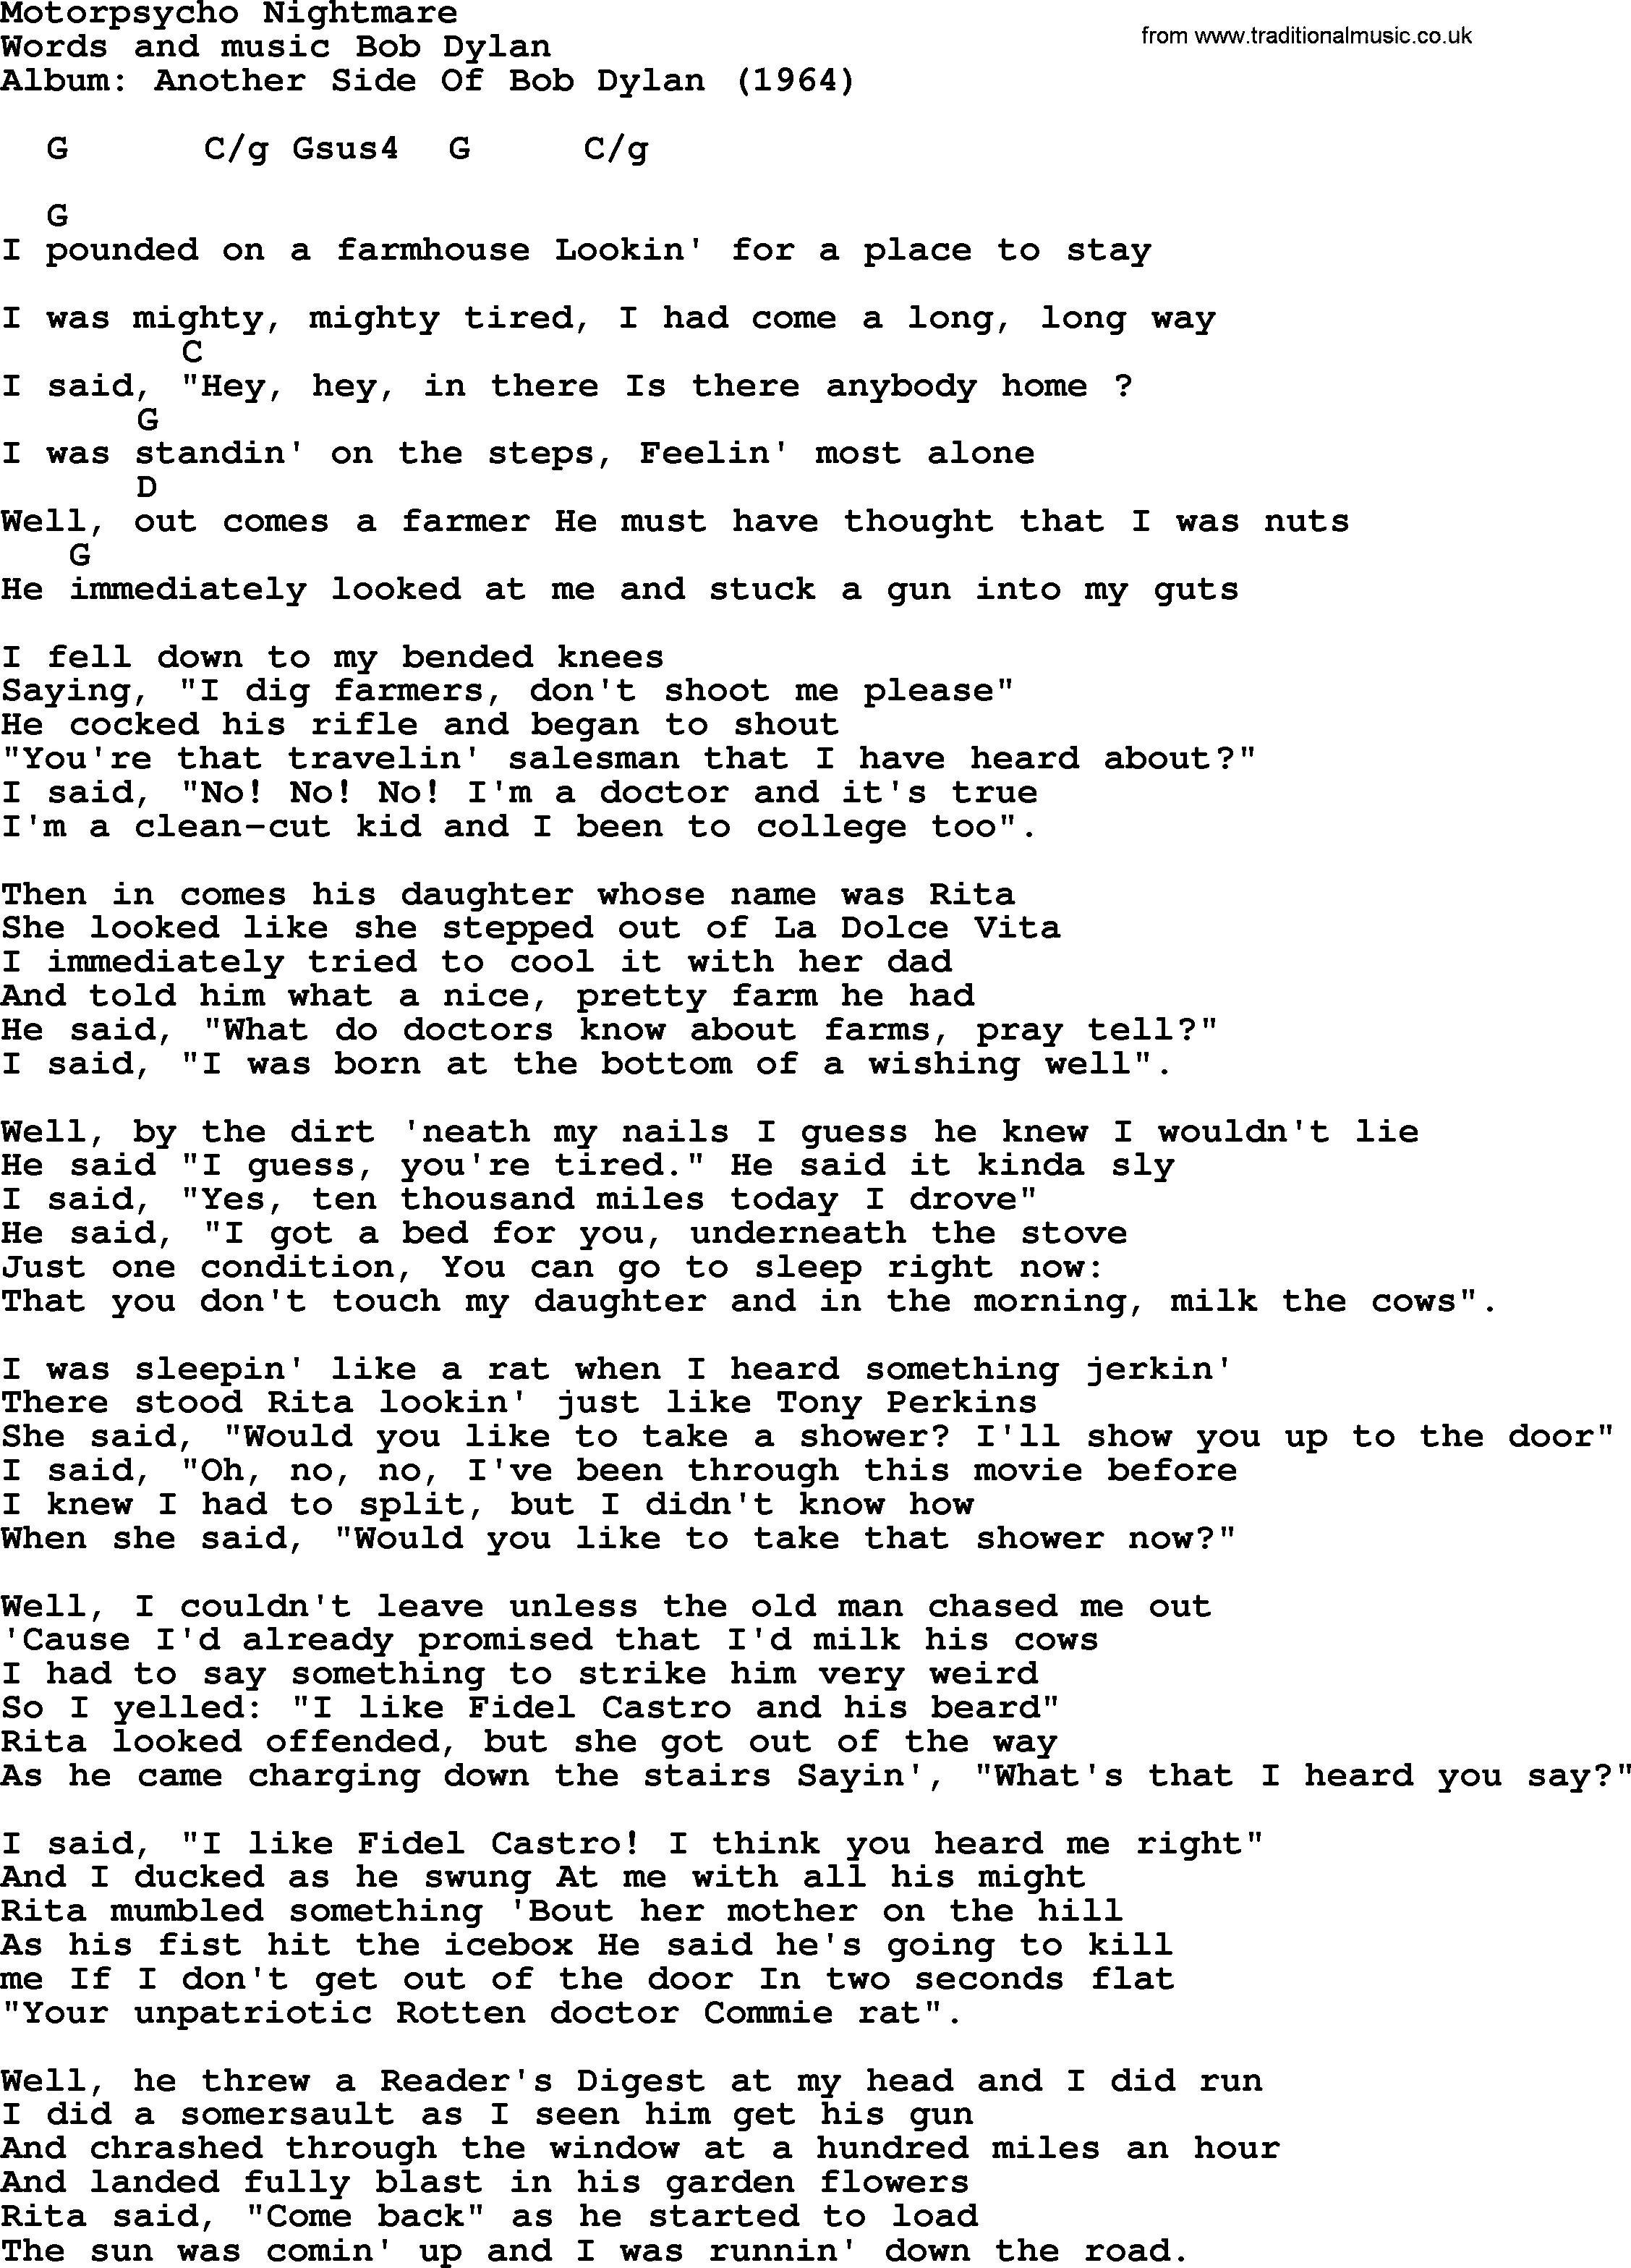 Bob Dylan song, lyrics with chords - Motorpsycho Nightmare